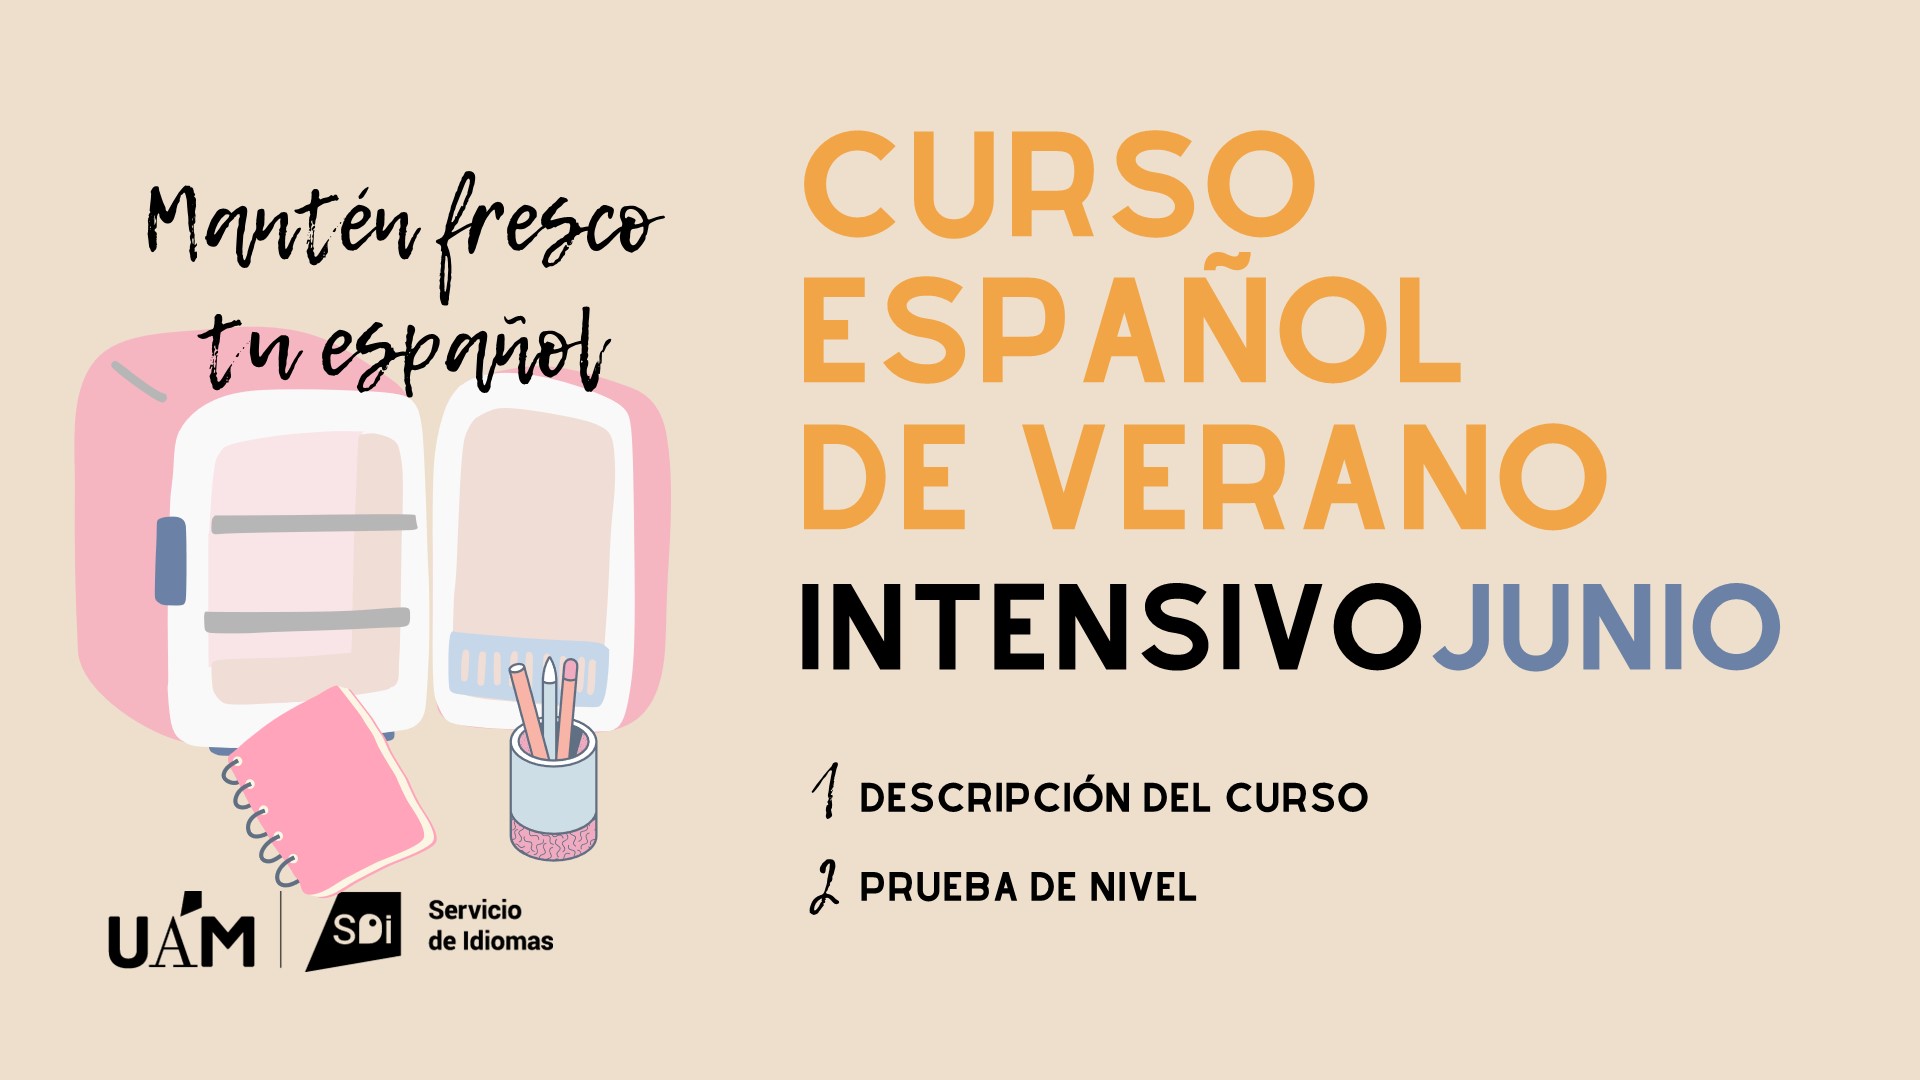 Diapositiva que anuncia el curso intensivo de español